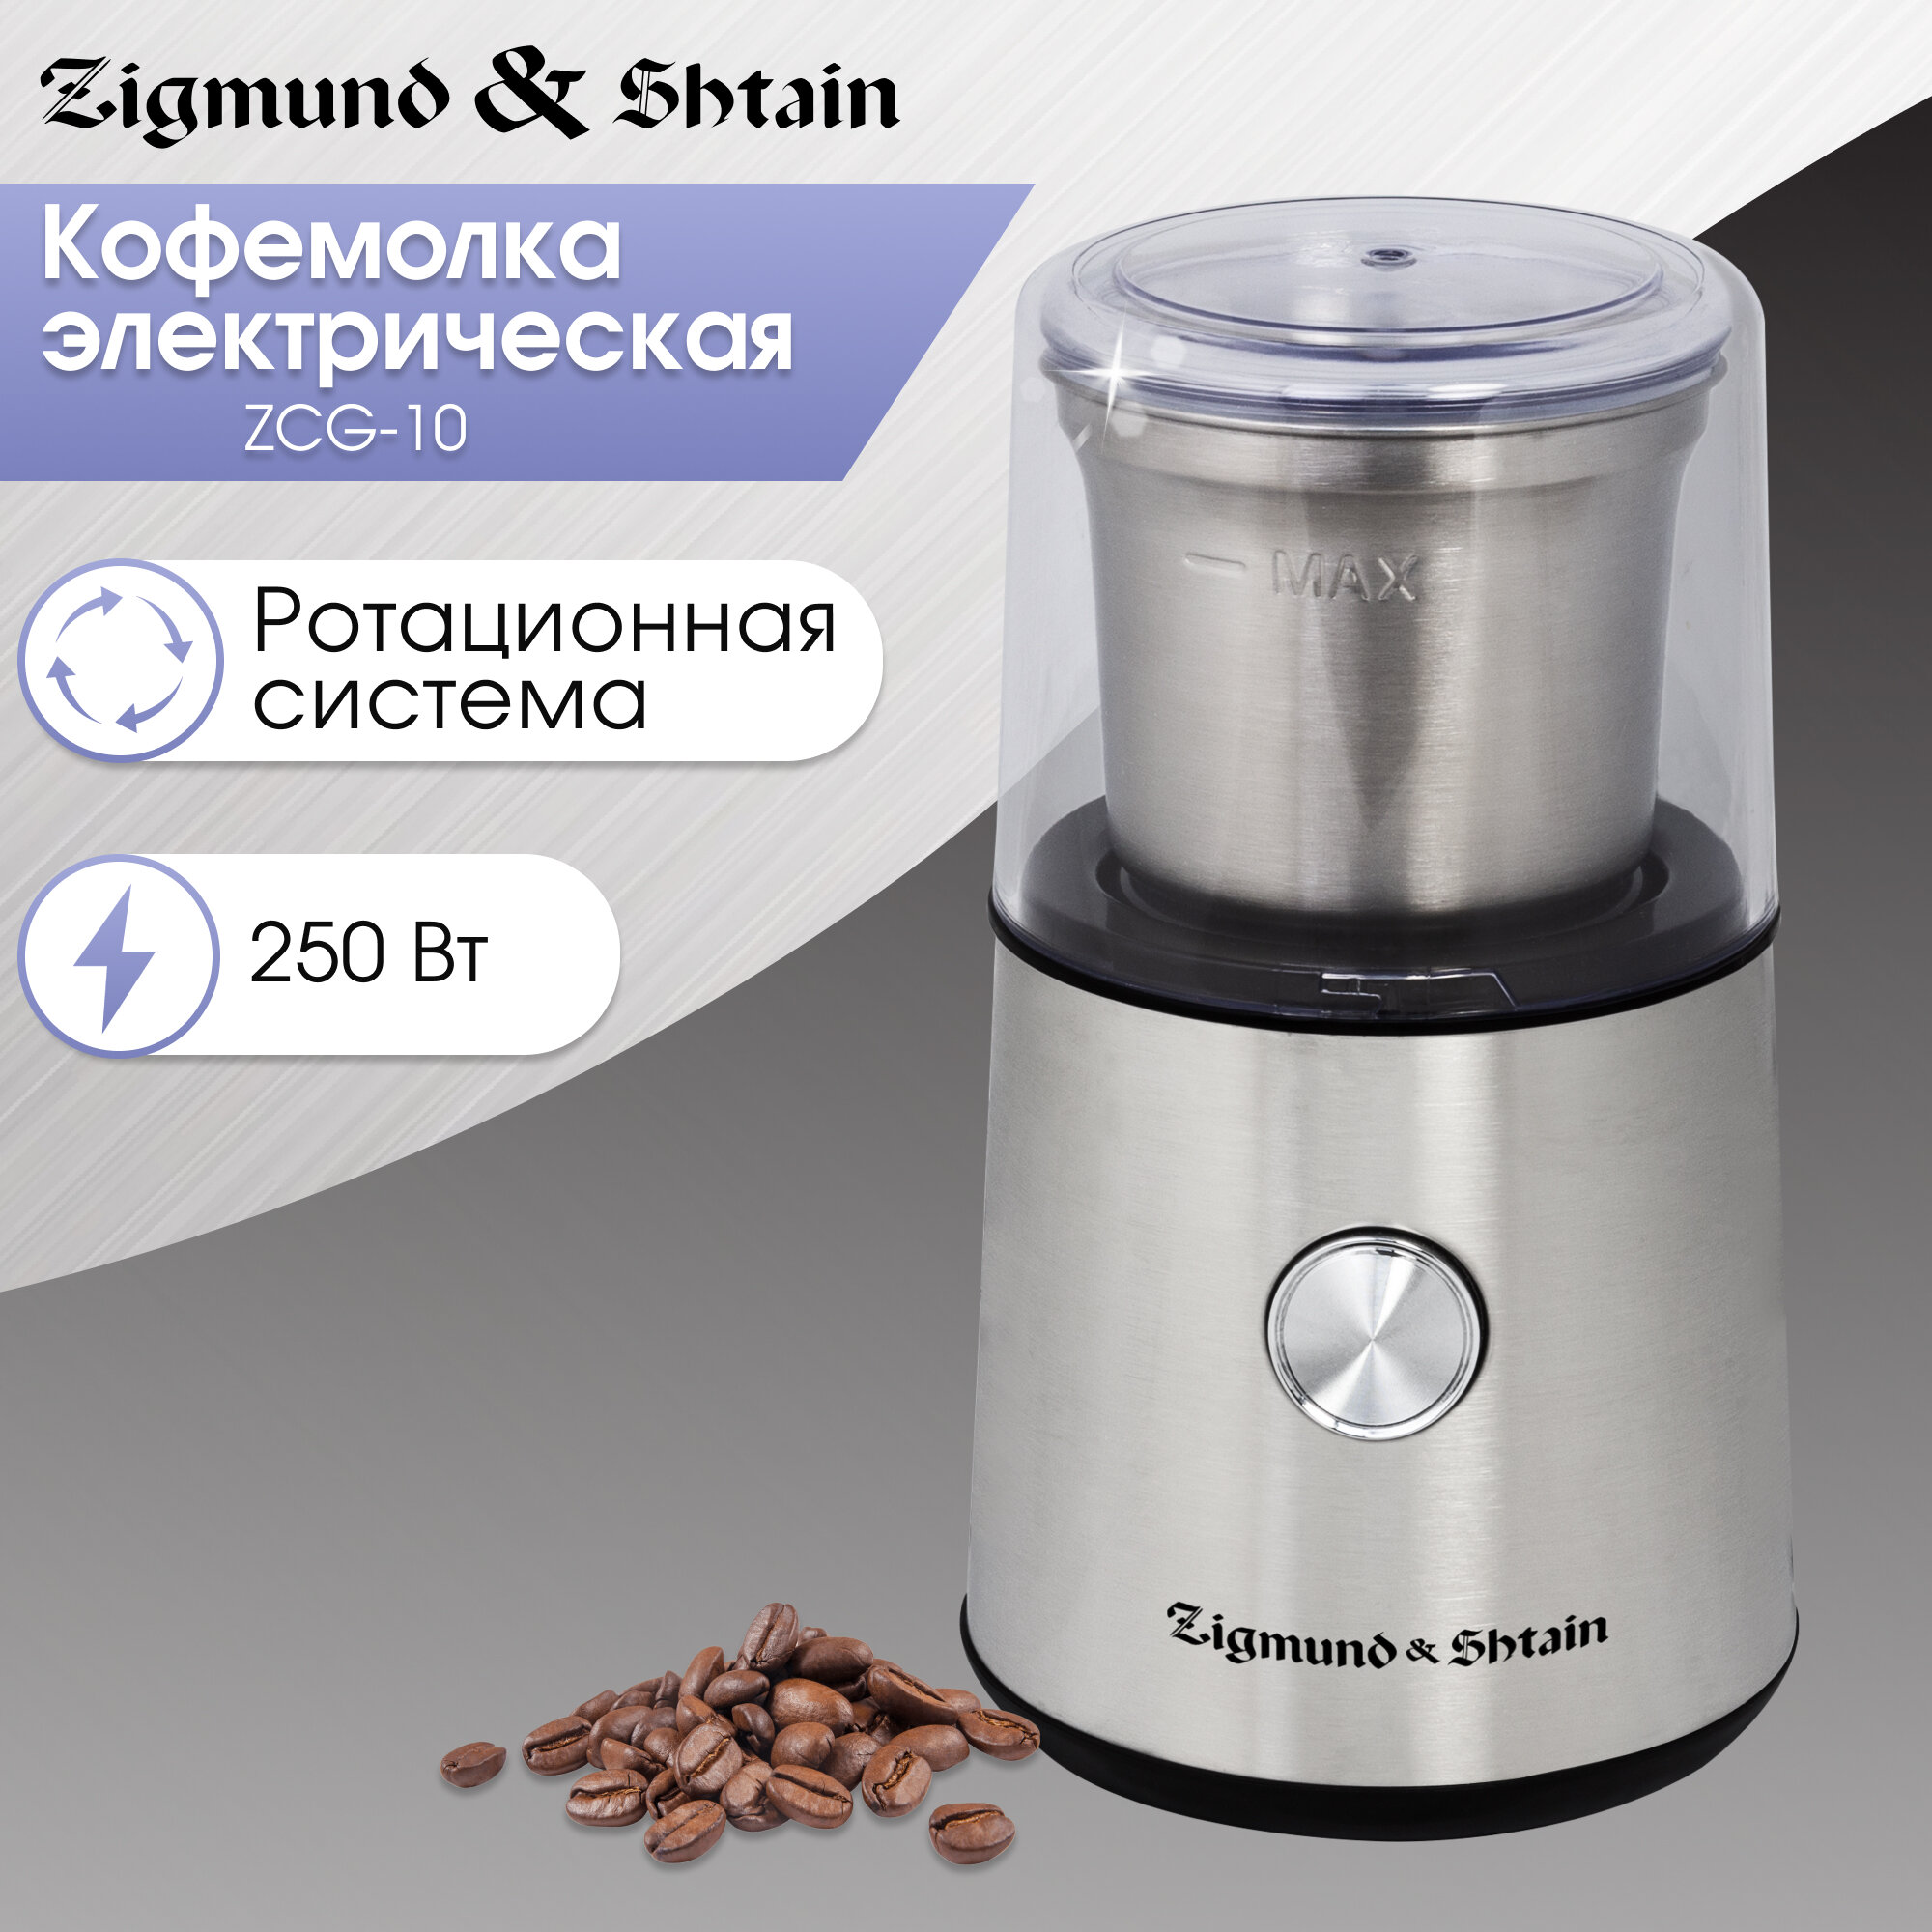 Кофемолка (уценка) Zigmund & Shtain ZCG-10 уценка